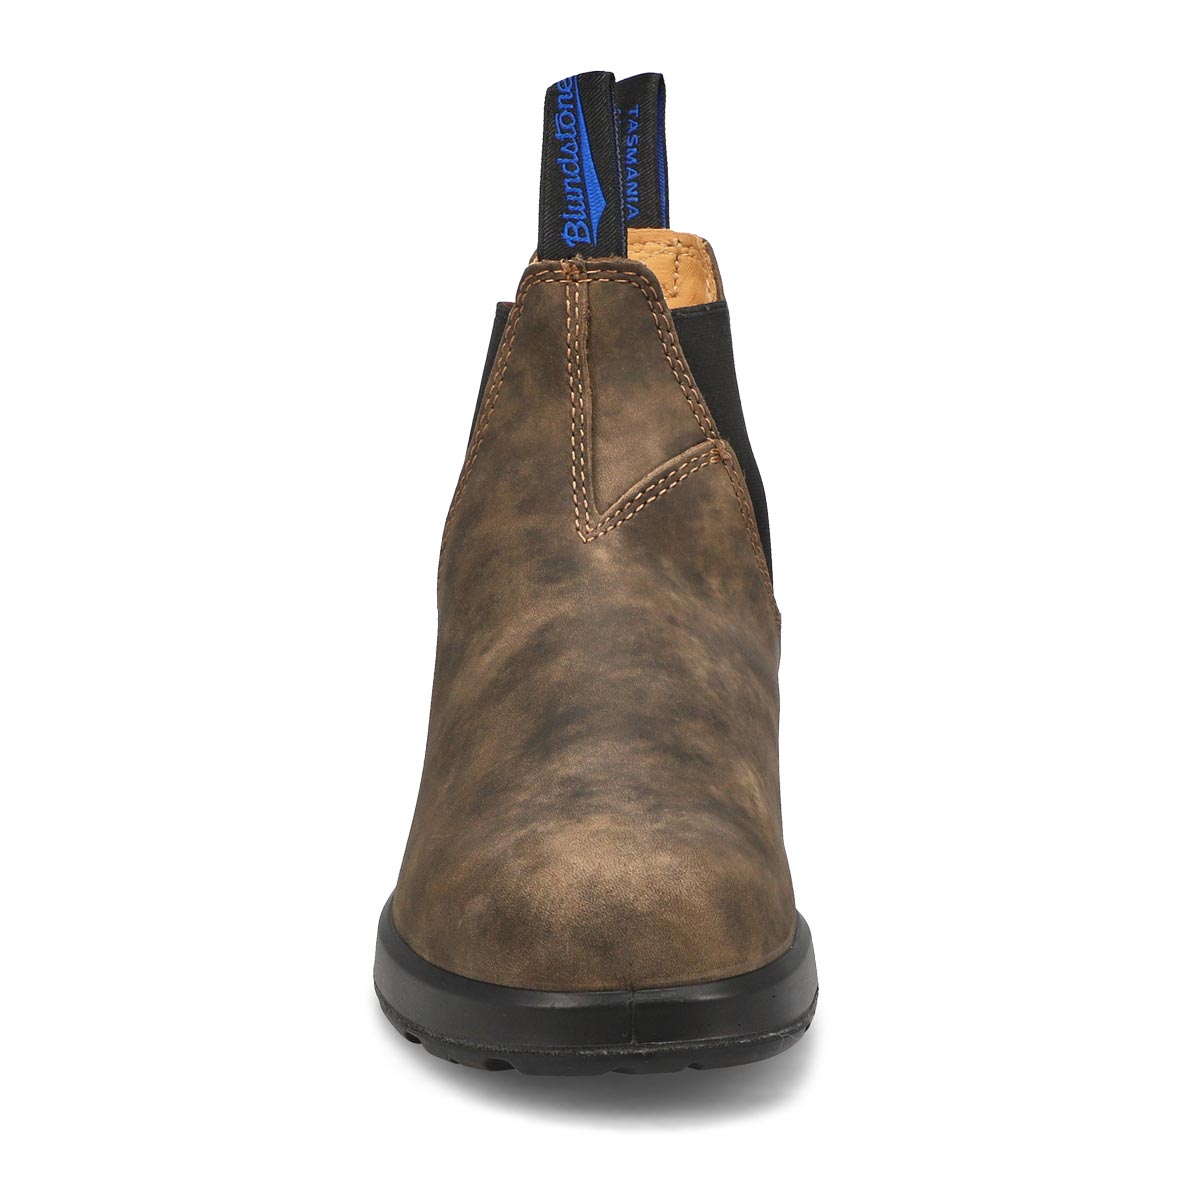 Unisex 2242 Winter All-Terrian Boot -Rustic Brown